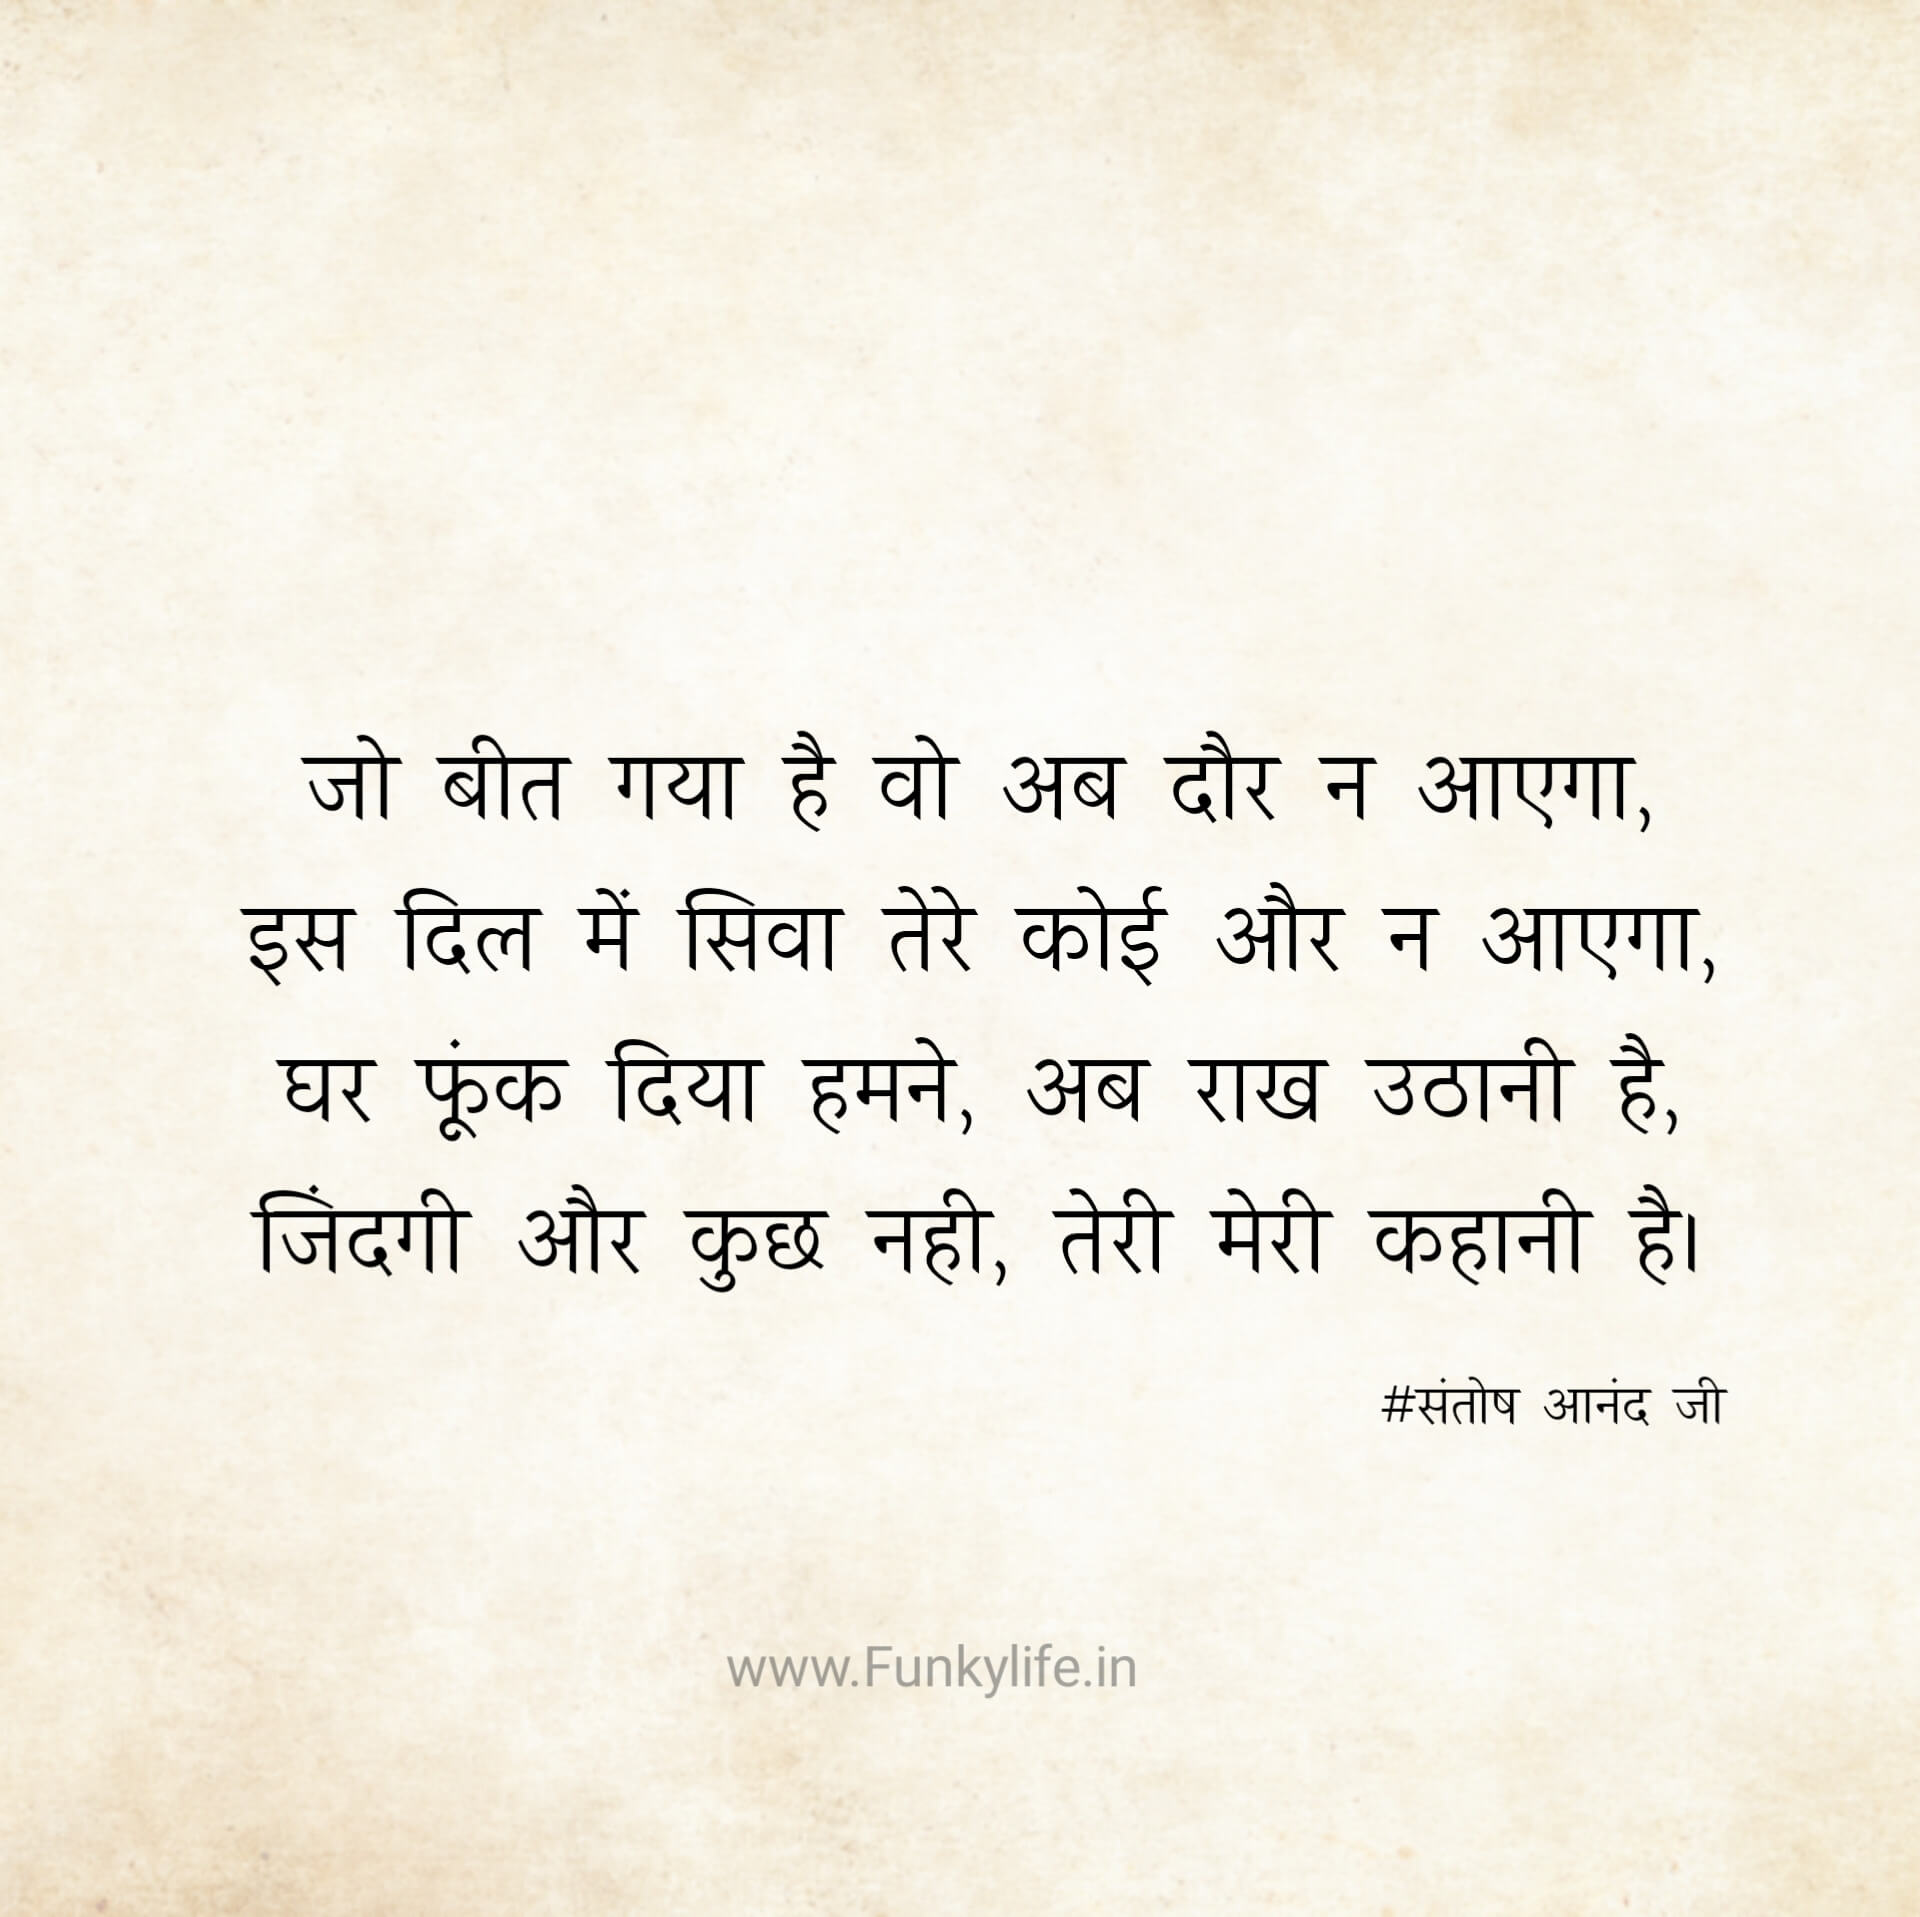 Santosh Anand ji words in hindi image Download